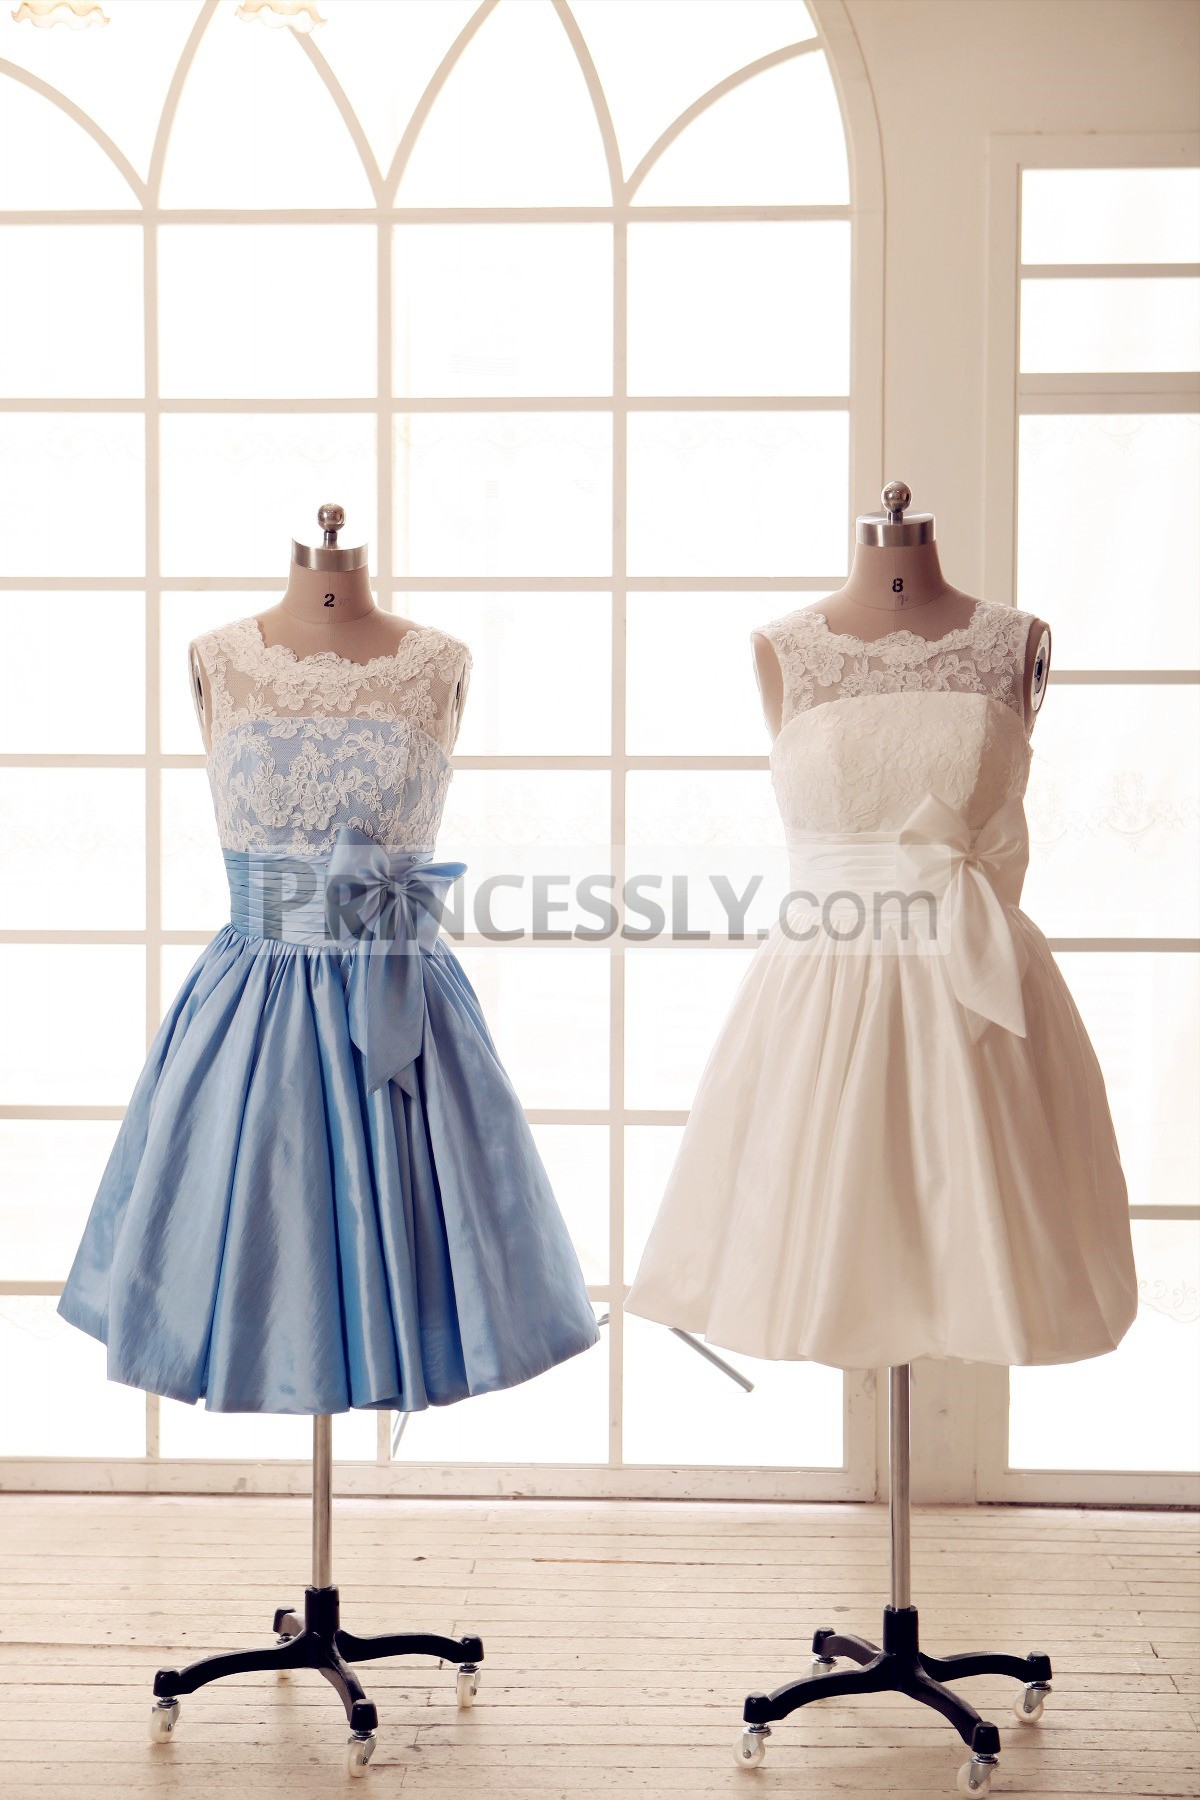 Princessly.com-K1001960-Lace Ivory/Blue Taffeta Bridesmaid Dress In knee Short Length-31